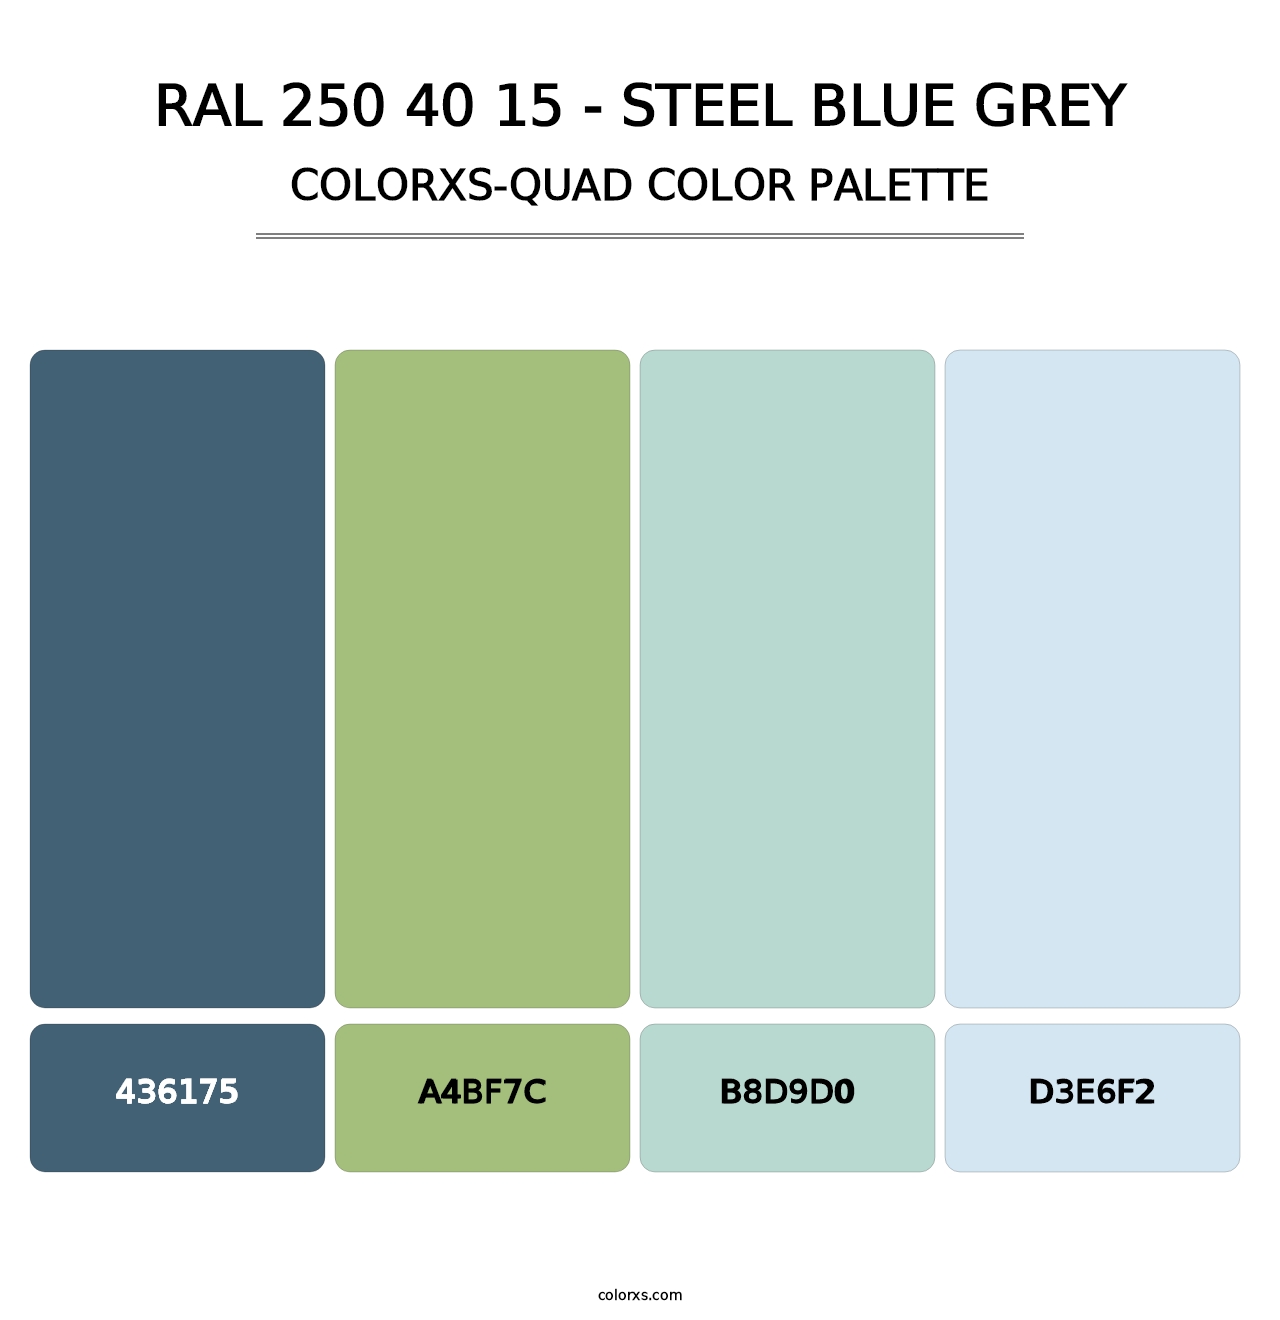 RAL 250 40 15 - Steel Blue Grey - Colorxs Quad Palette